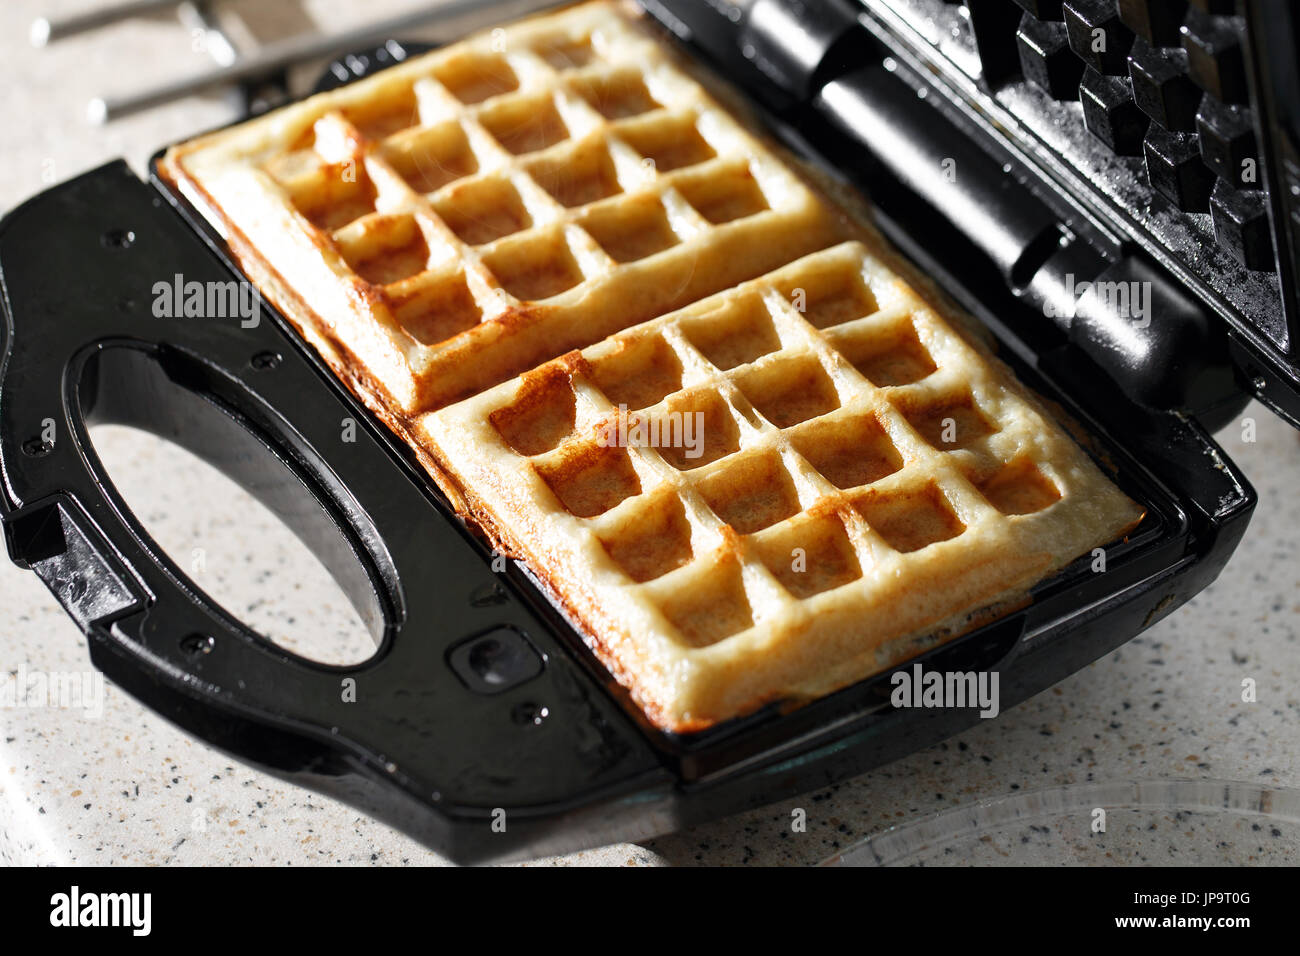 https://c8.alamy.com/comp/JP9T0G/hash-browns-made-in-waffle-maker-kitchen-hack-JP9T0G.jpg